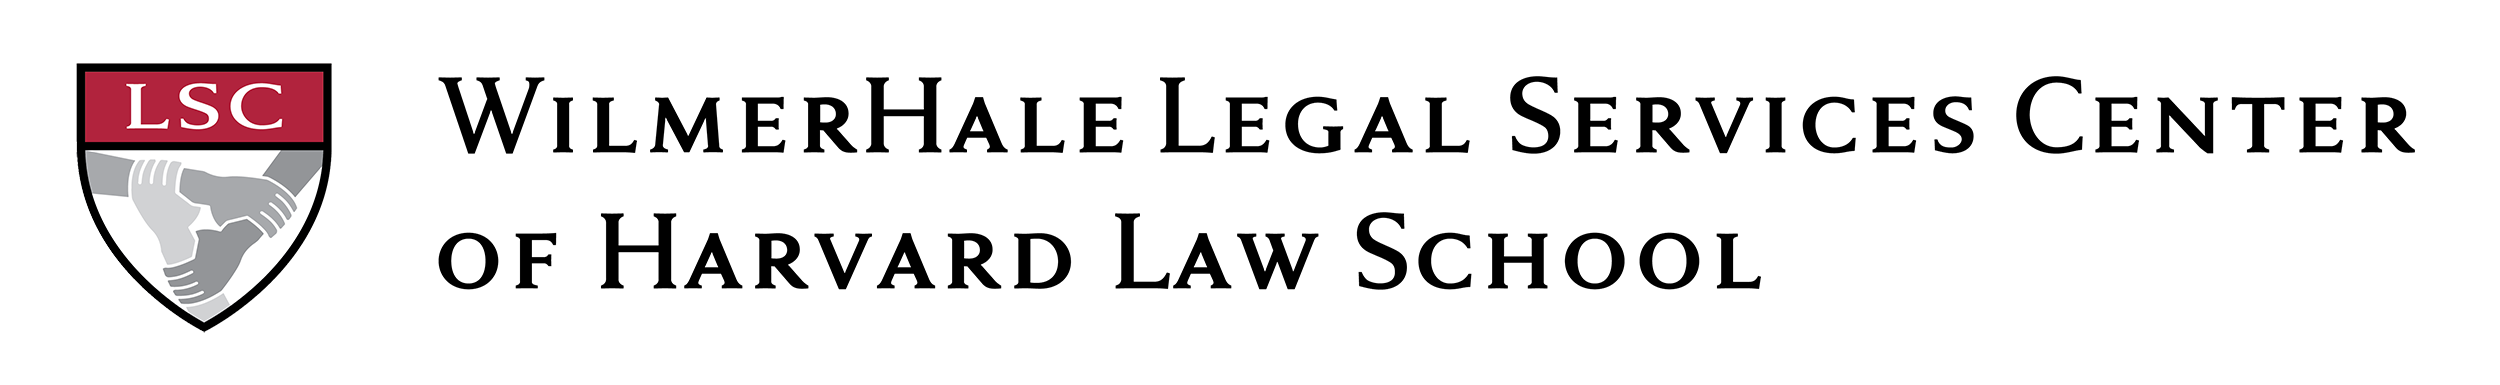 Legal Services logo retina